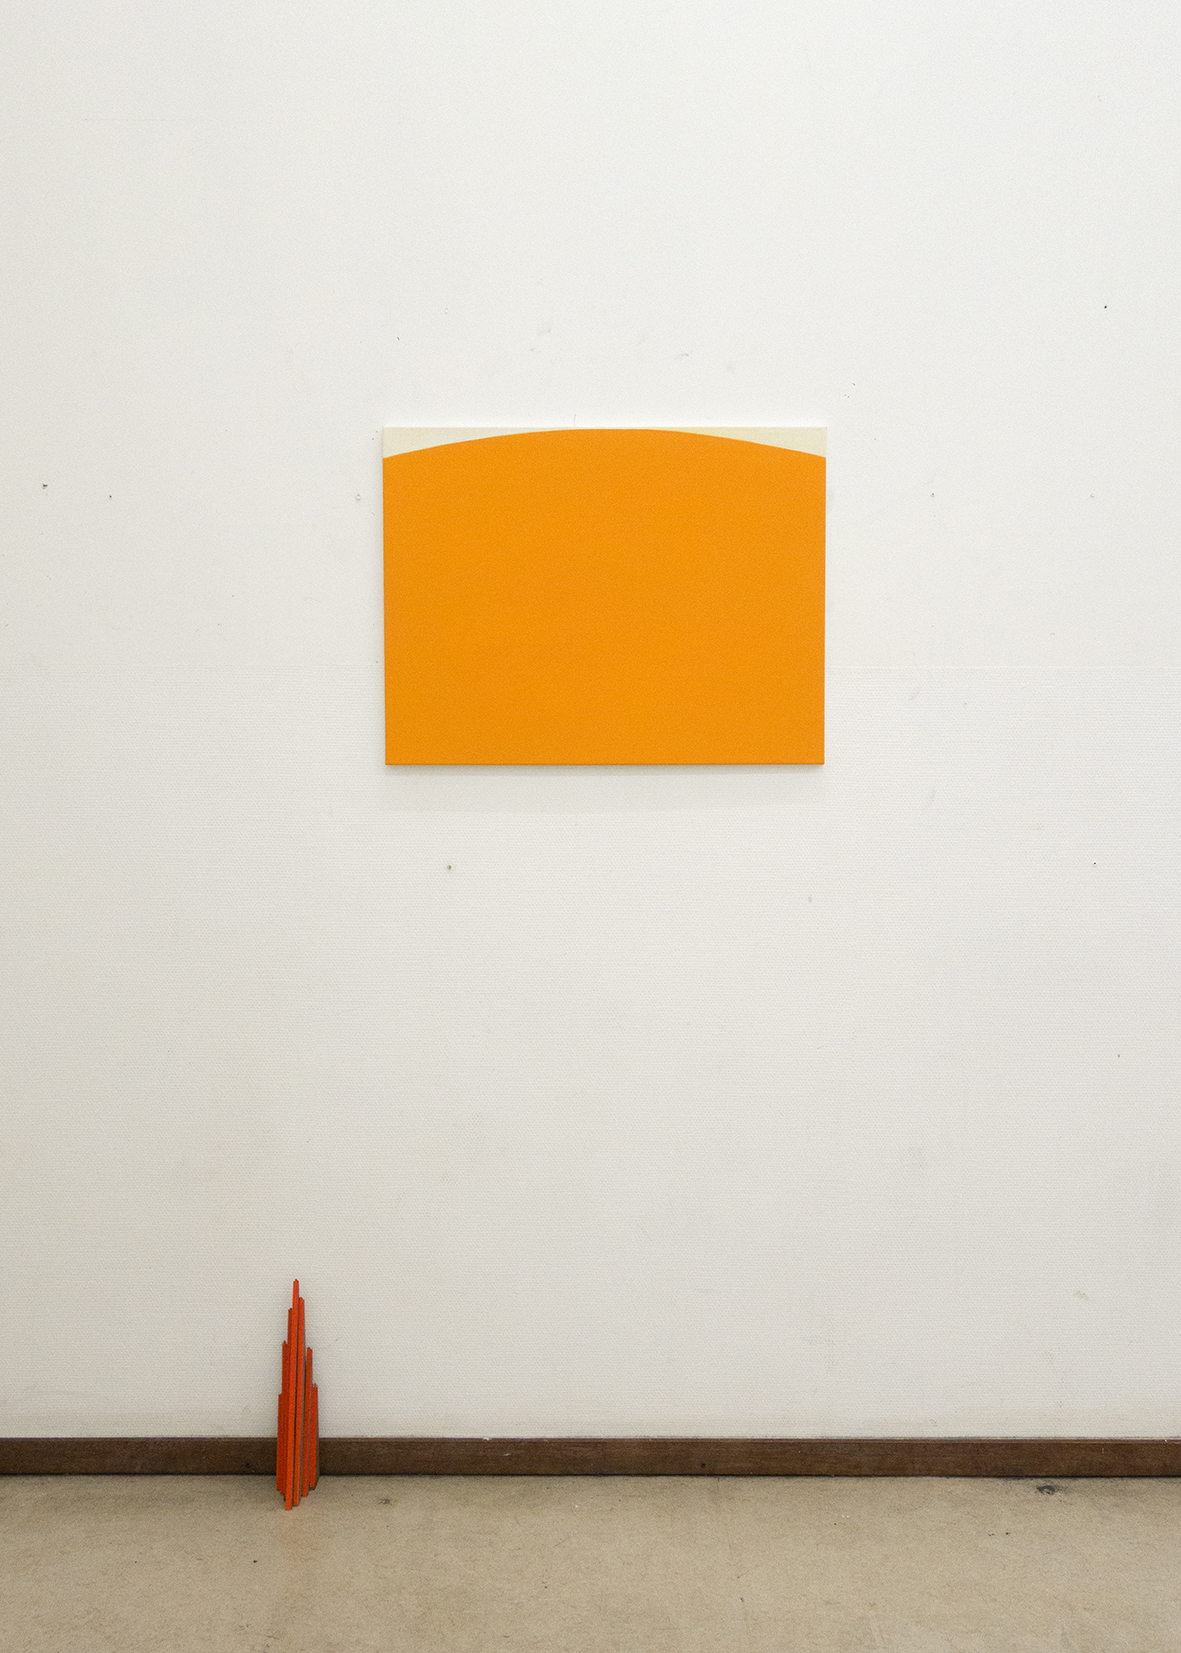  “yellow mountain” 2016, gouache on canvas, 40 x 60 cm  “orange mountain” (found object) 2016, wood and paint, 30 x 16 x 25 cm 